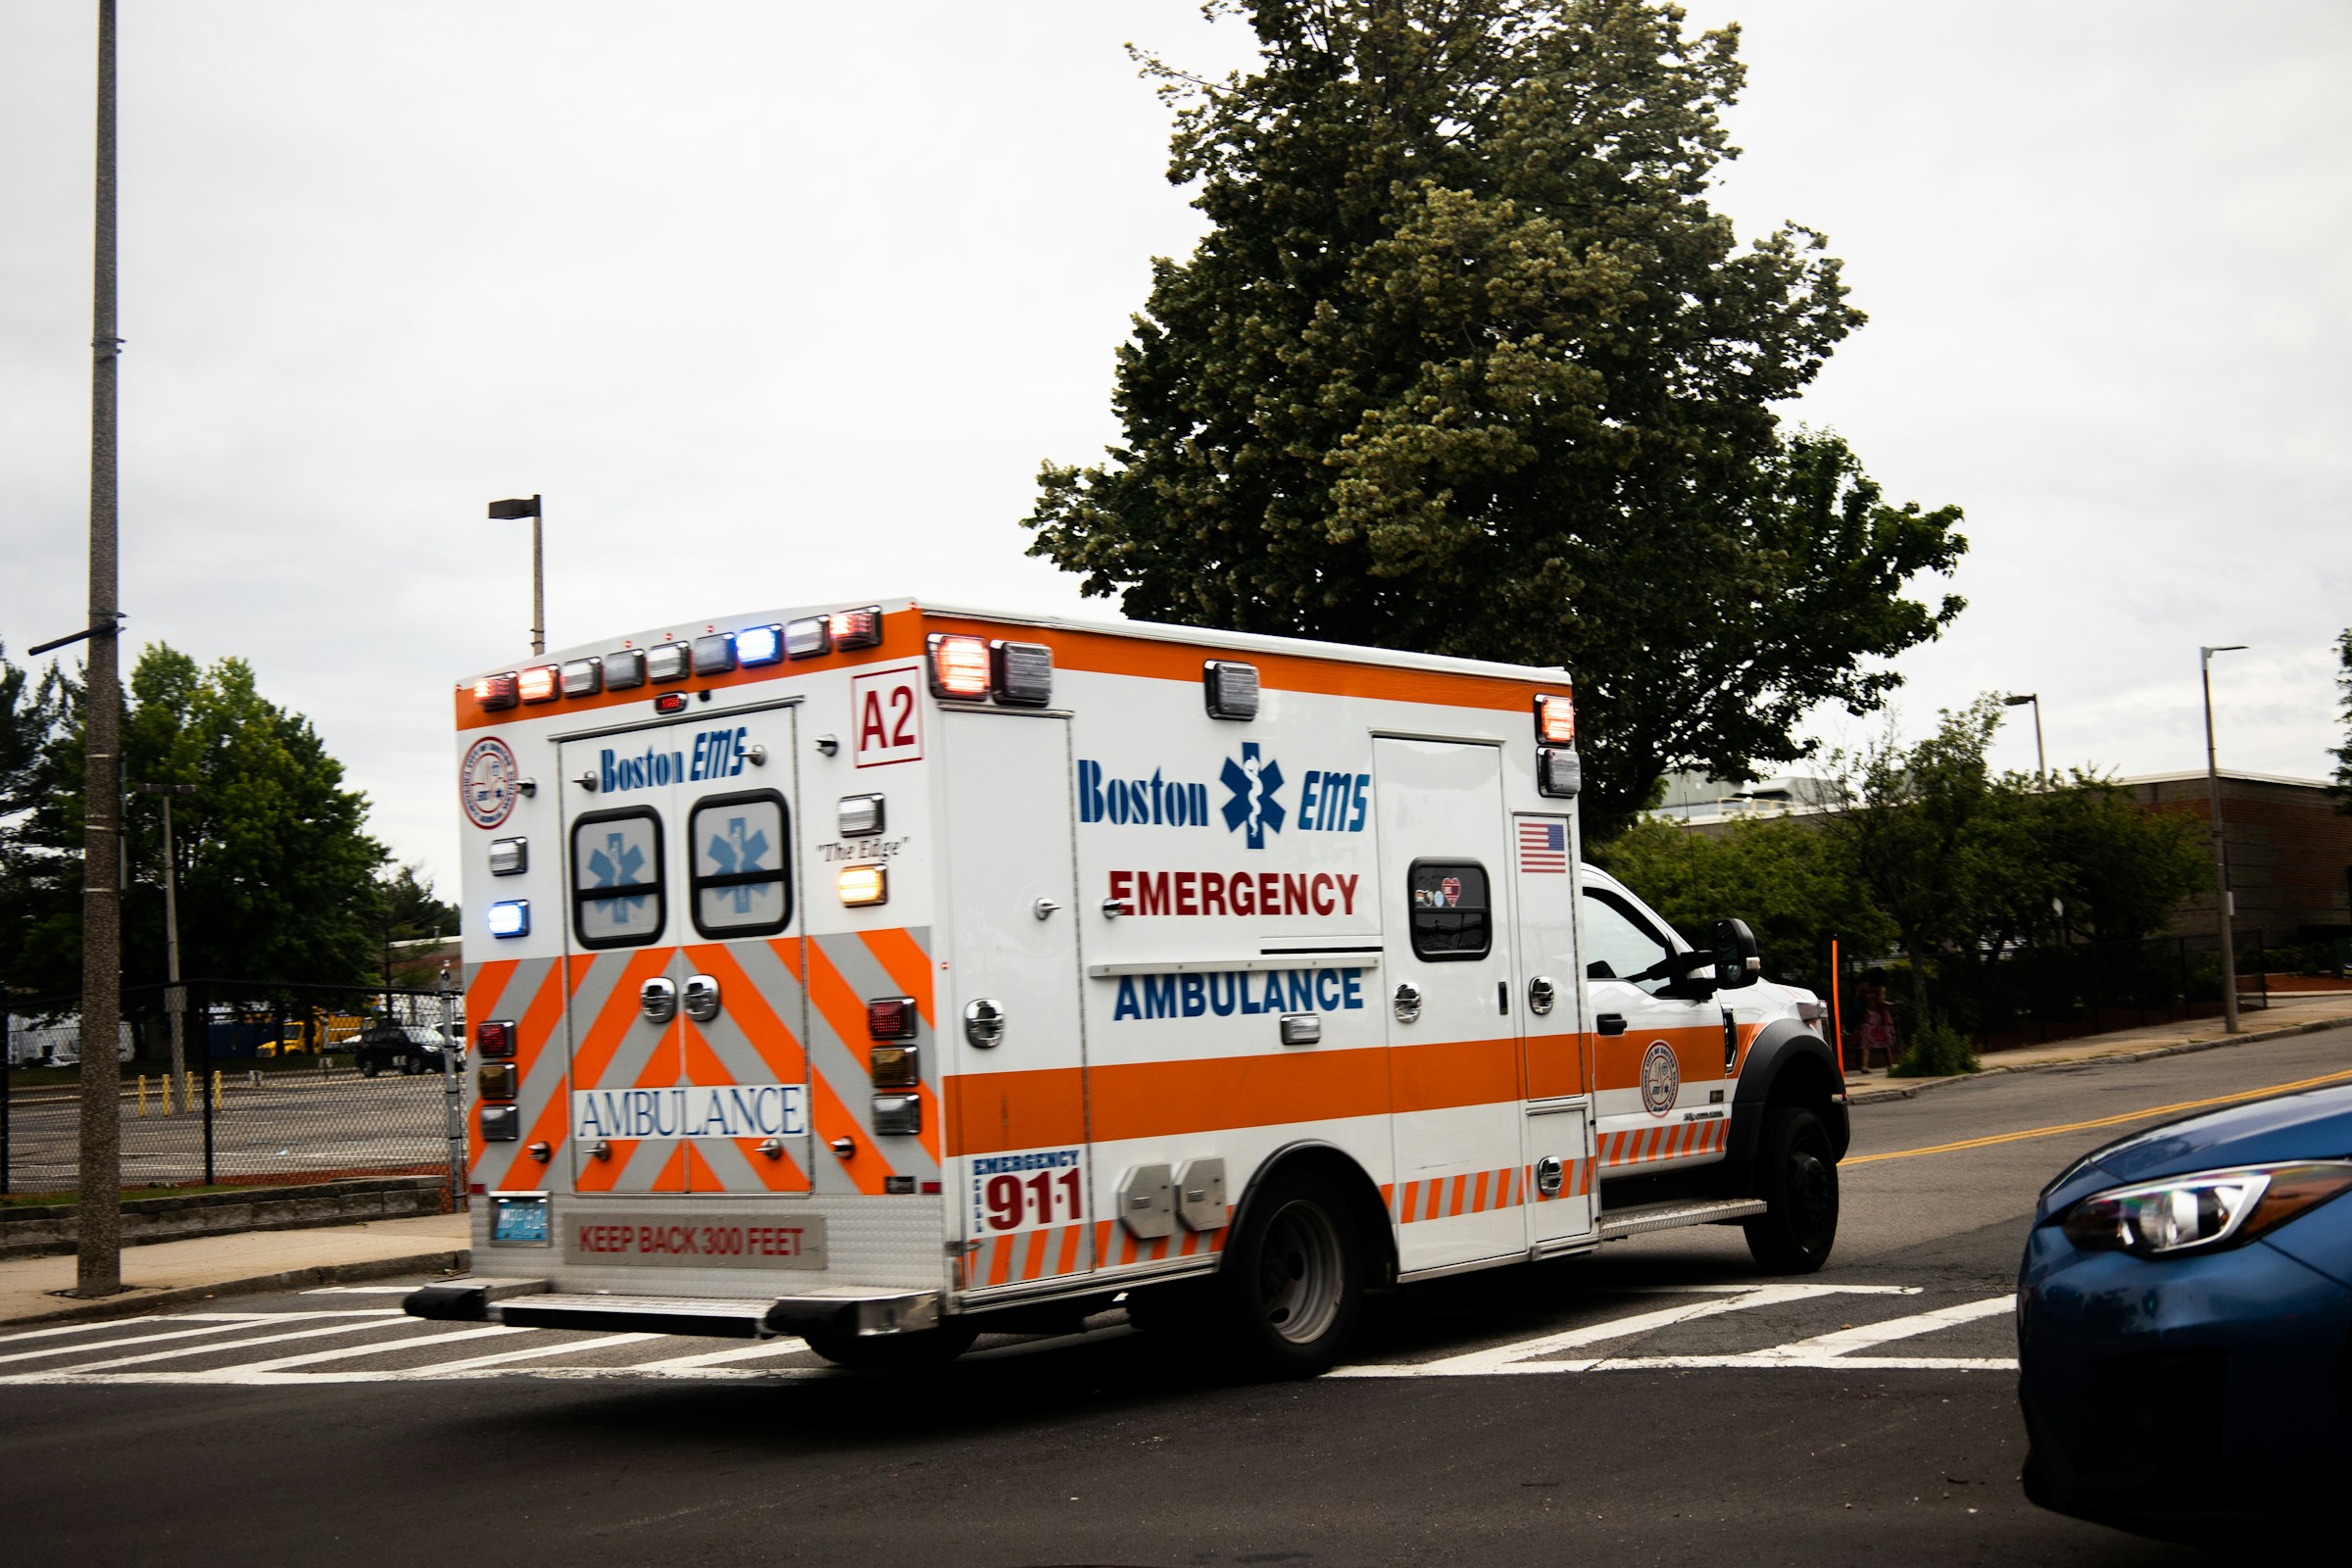 An ambulance on the road | Source: Unsplash